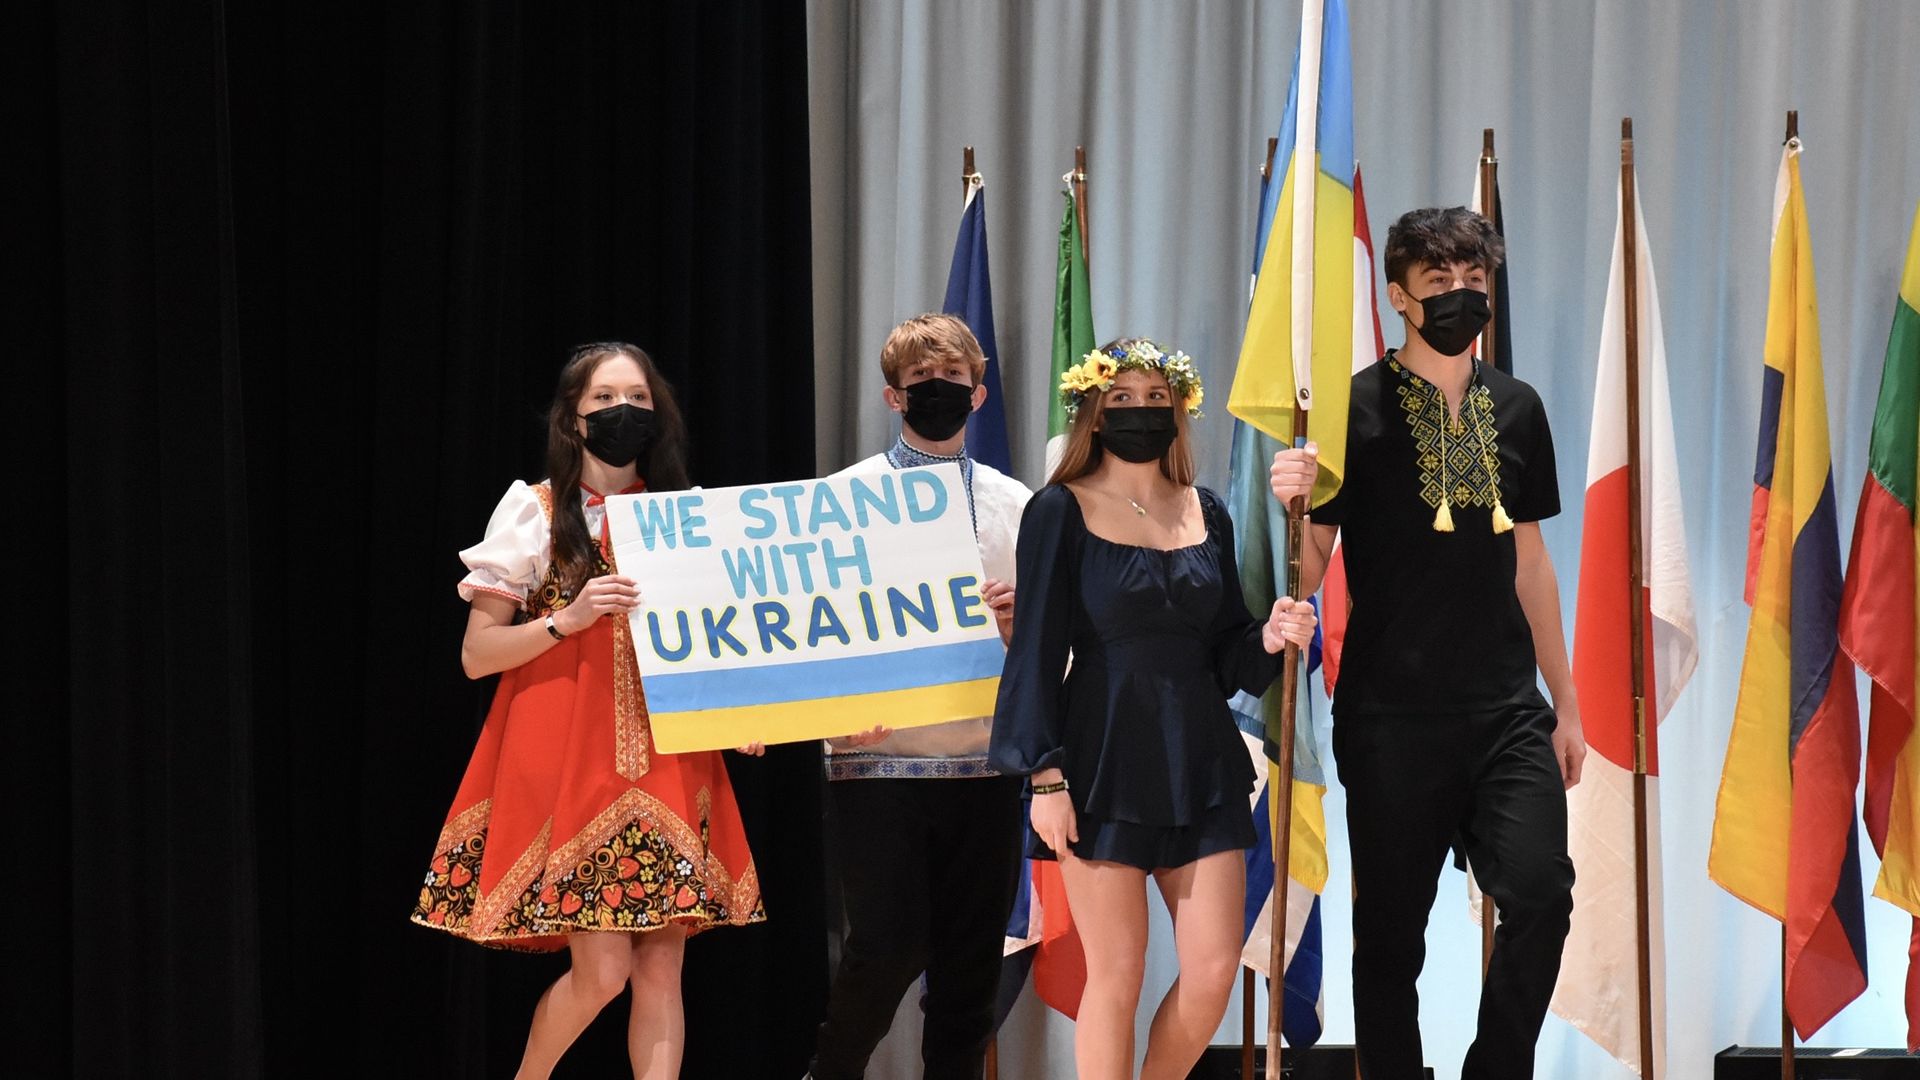 Students walk on stage with Ukrainian flag